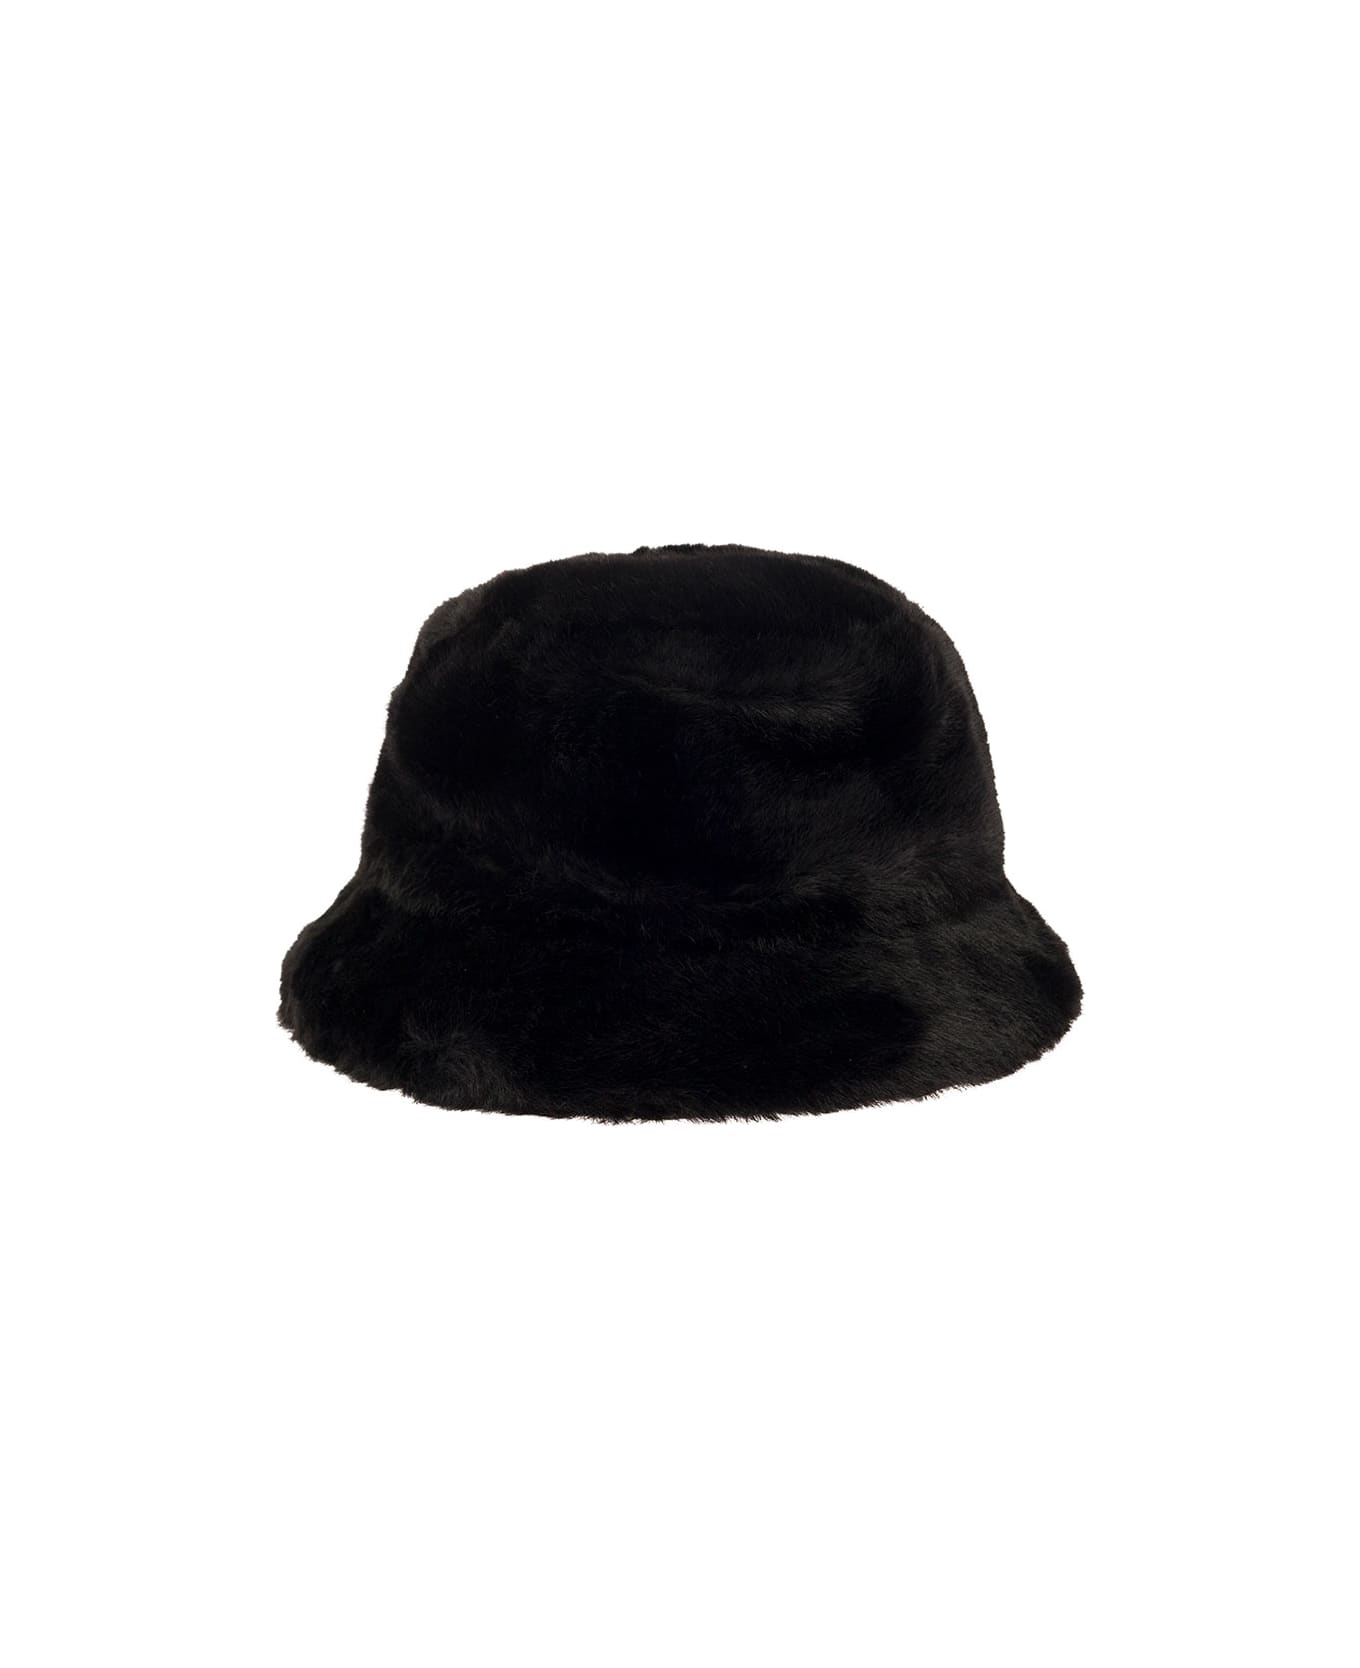 STAND STUDIO 'vera' Black Hat With Low Brim In Faux Fur Woman - Black 帽子